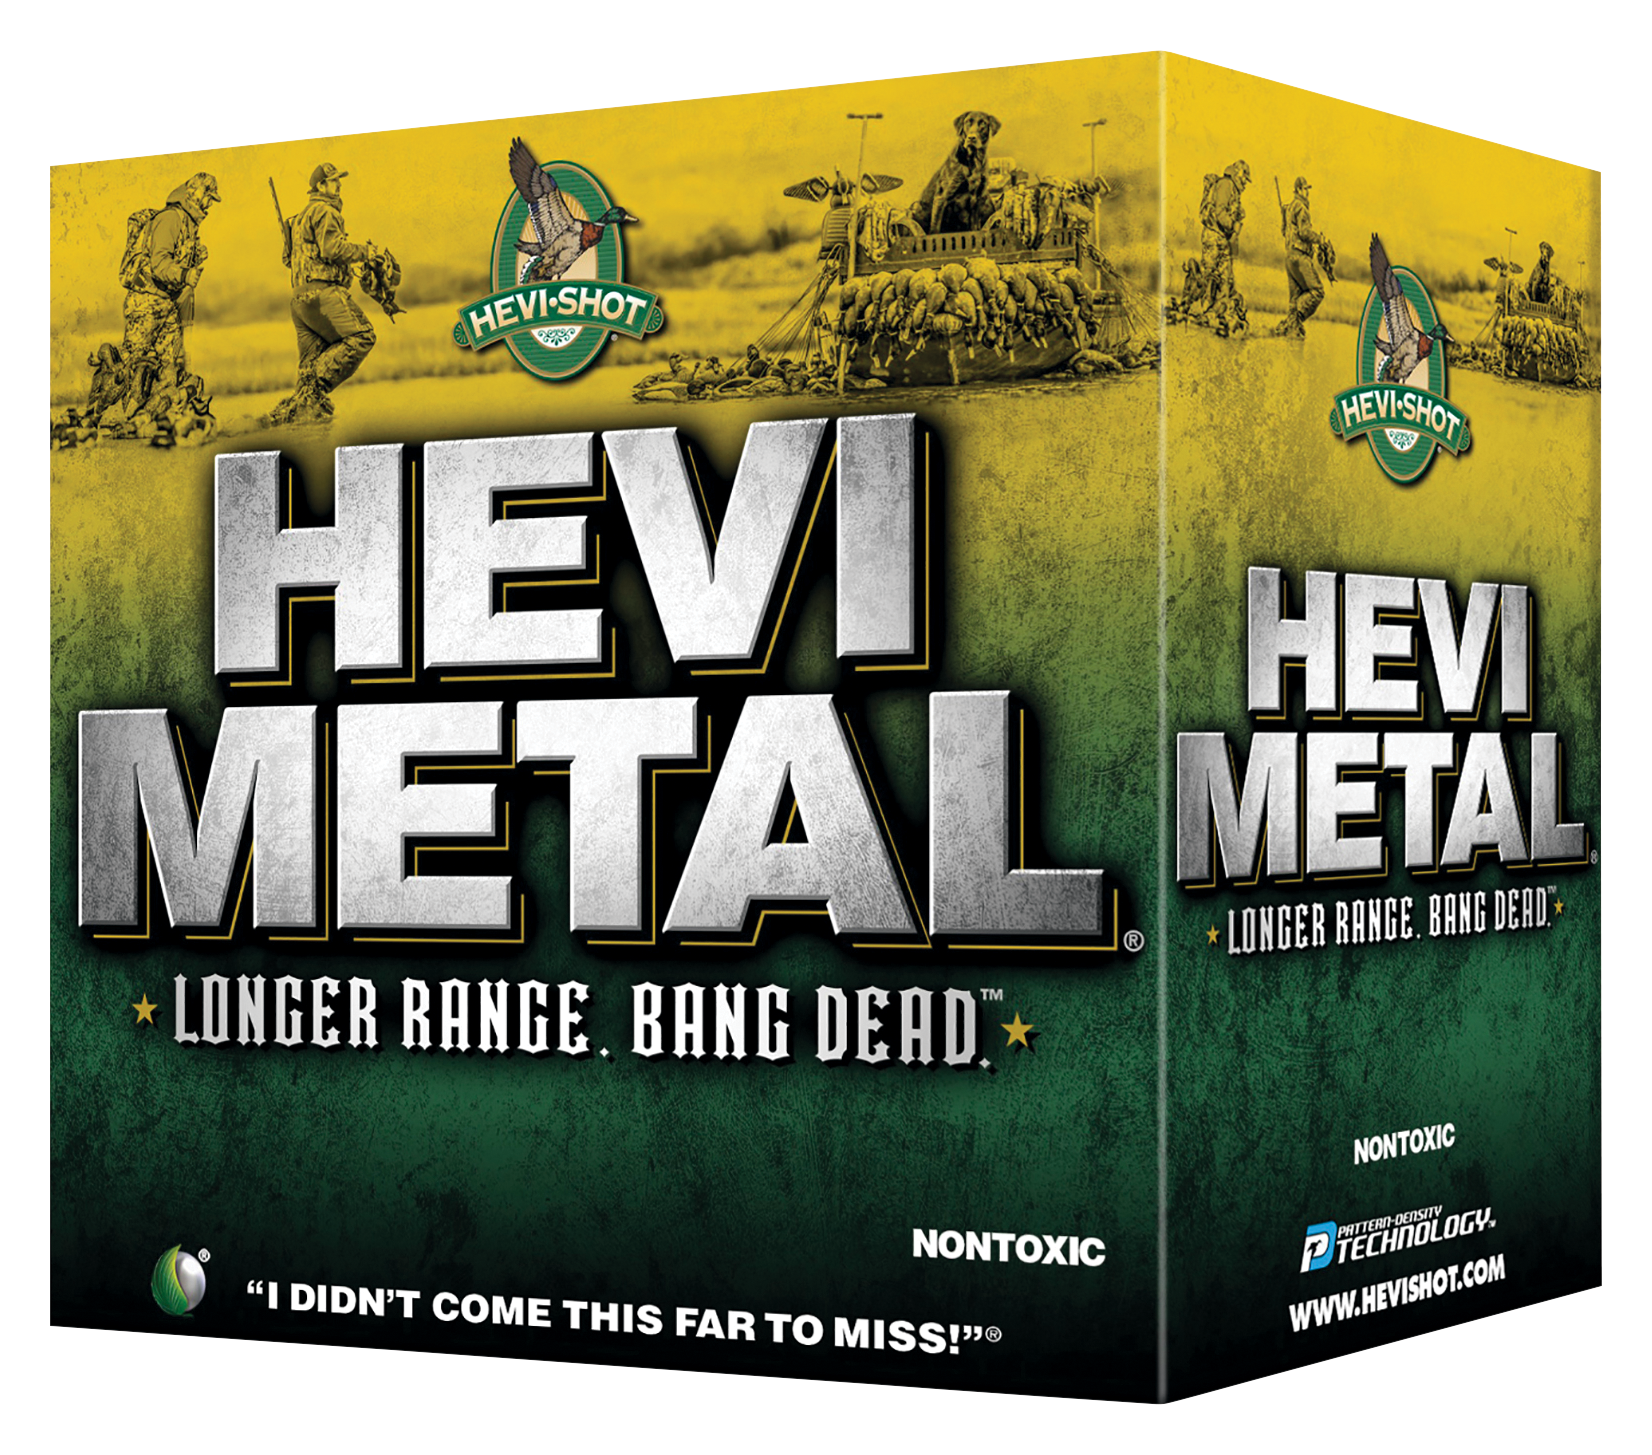 Hevi-Shot HEVI-Metal Longer Range Shotgun Shells - 12 Gauge - #2 - 2.75"" - 25 Rounds